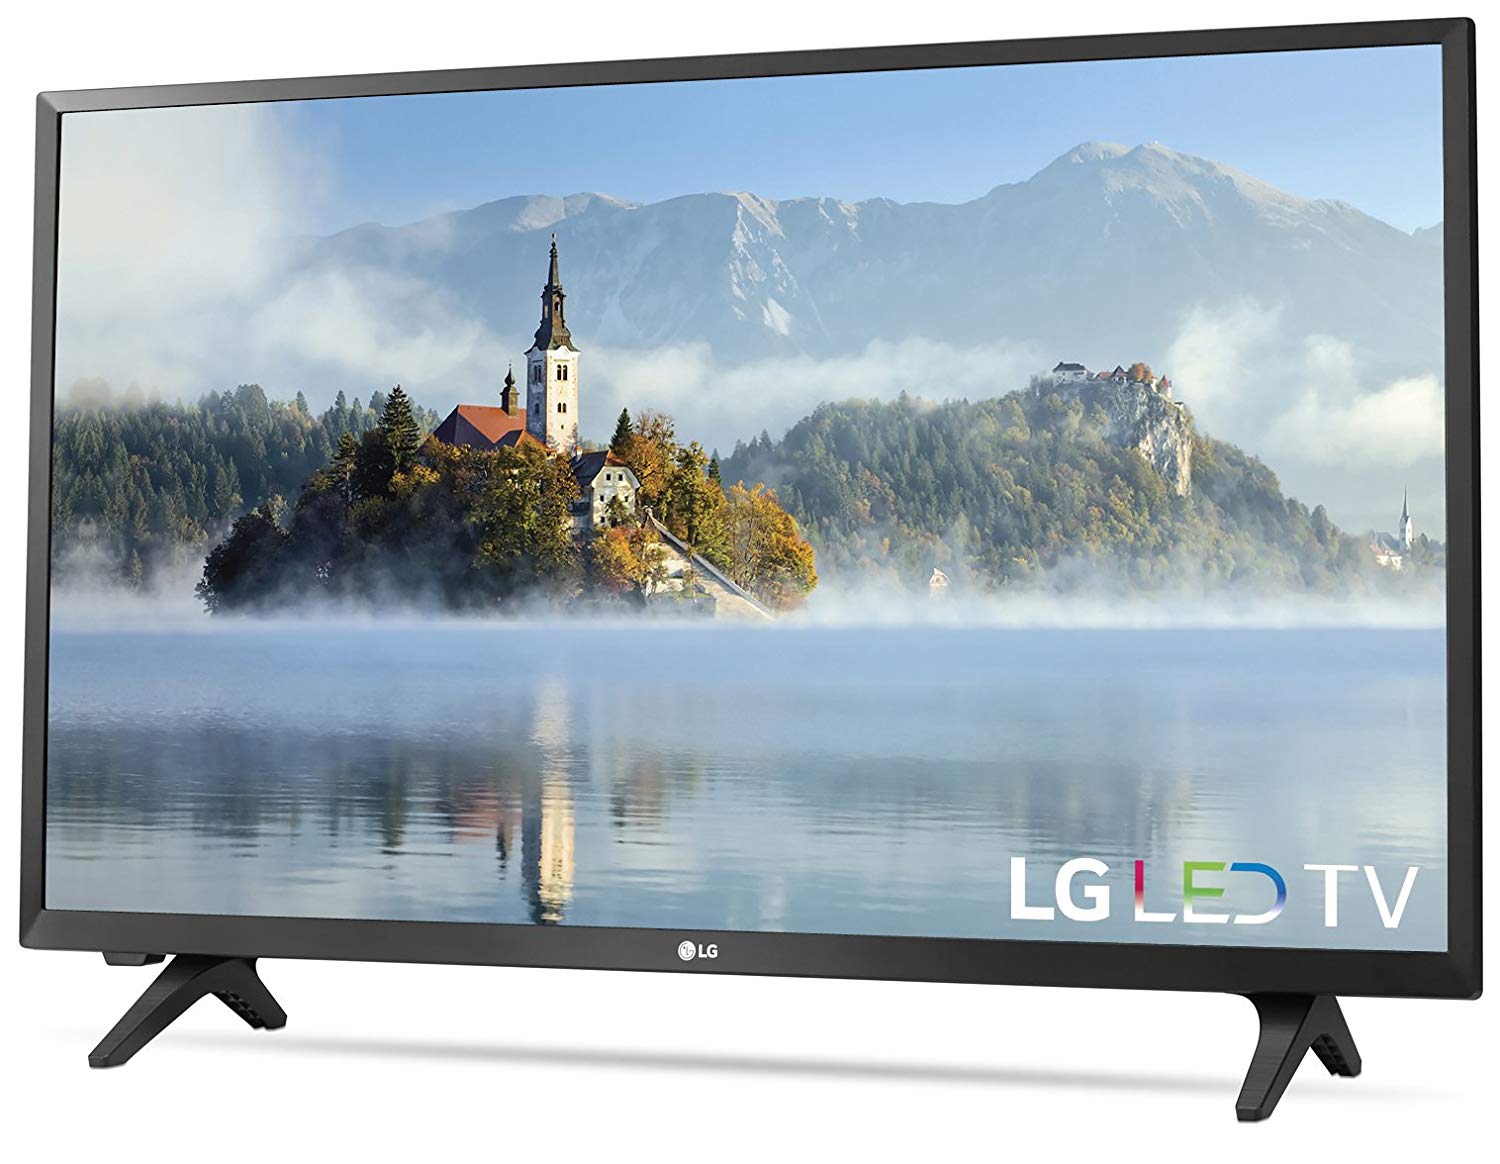 LG Электроника 32LJ500B 32-дюймовый светодиодный телевизор 720p (модель 2017 г.)